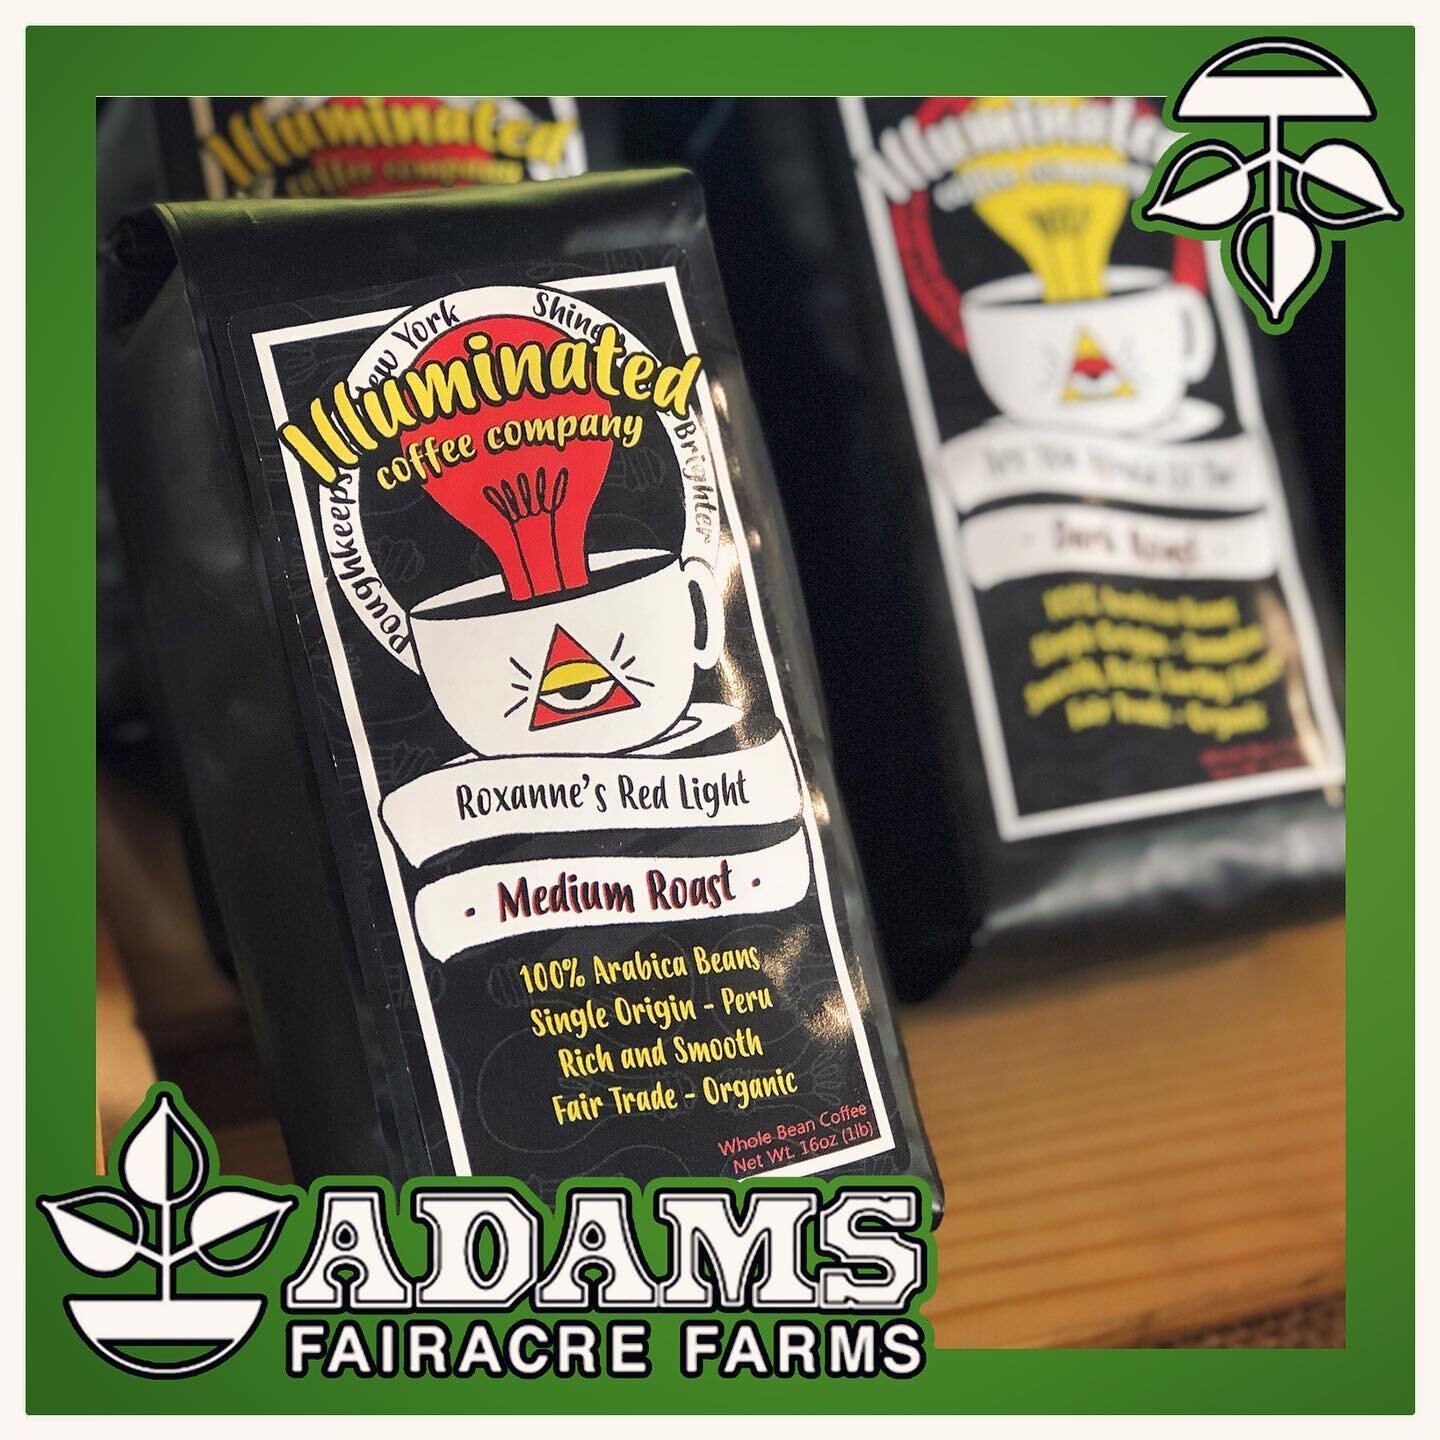 Featured at Adam&rsquo;s this week!
#Poughkeepsie #CoffeeRoaster #AdamsFarms #HudsonValley #Fresh #FairTrade #Organic #Peru #CoffeeBeans #Pounds #Sumatra #NewYork